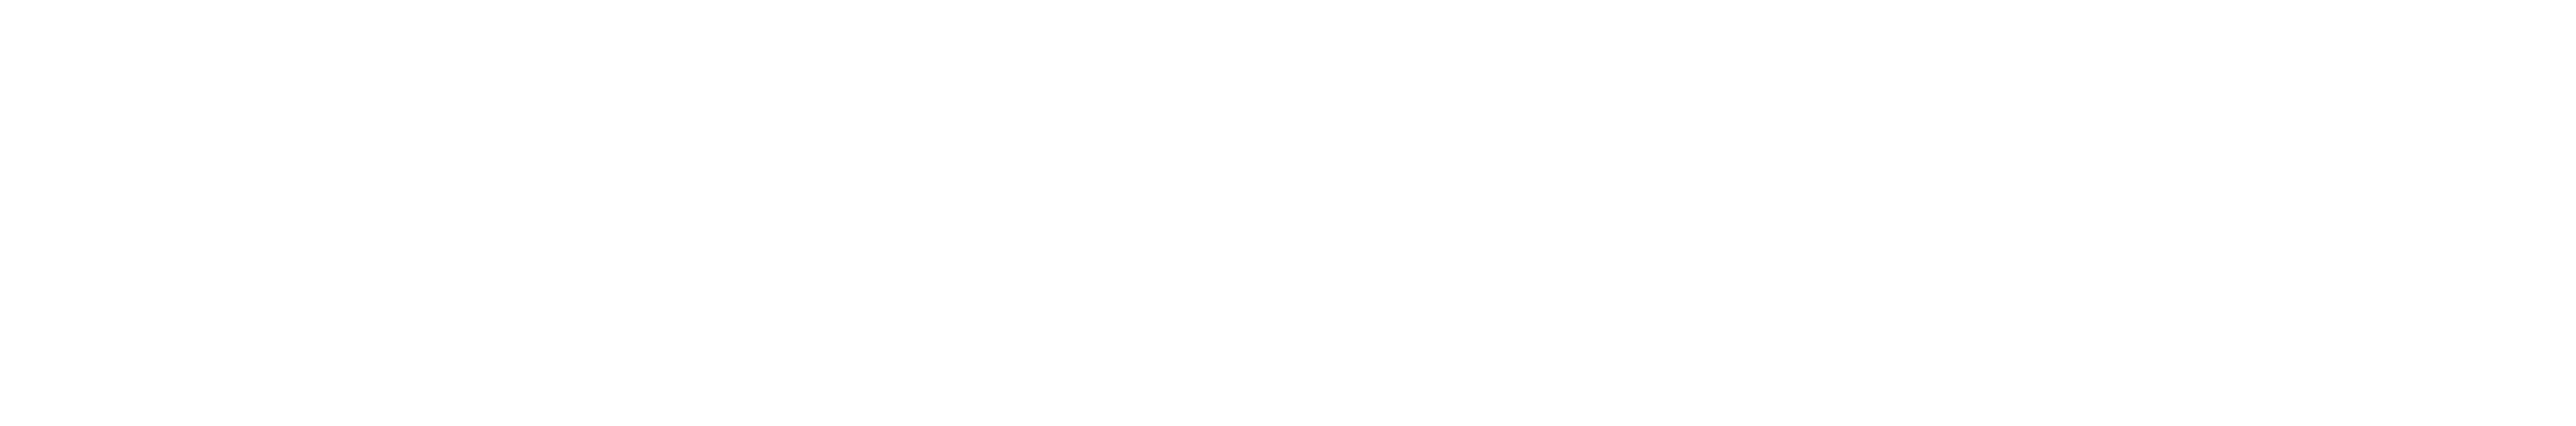 Jazz Pharmaceulticals logo